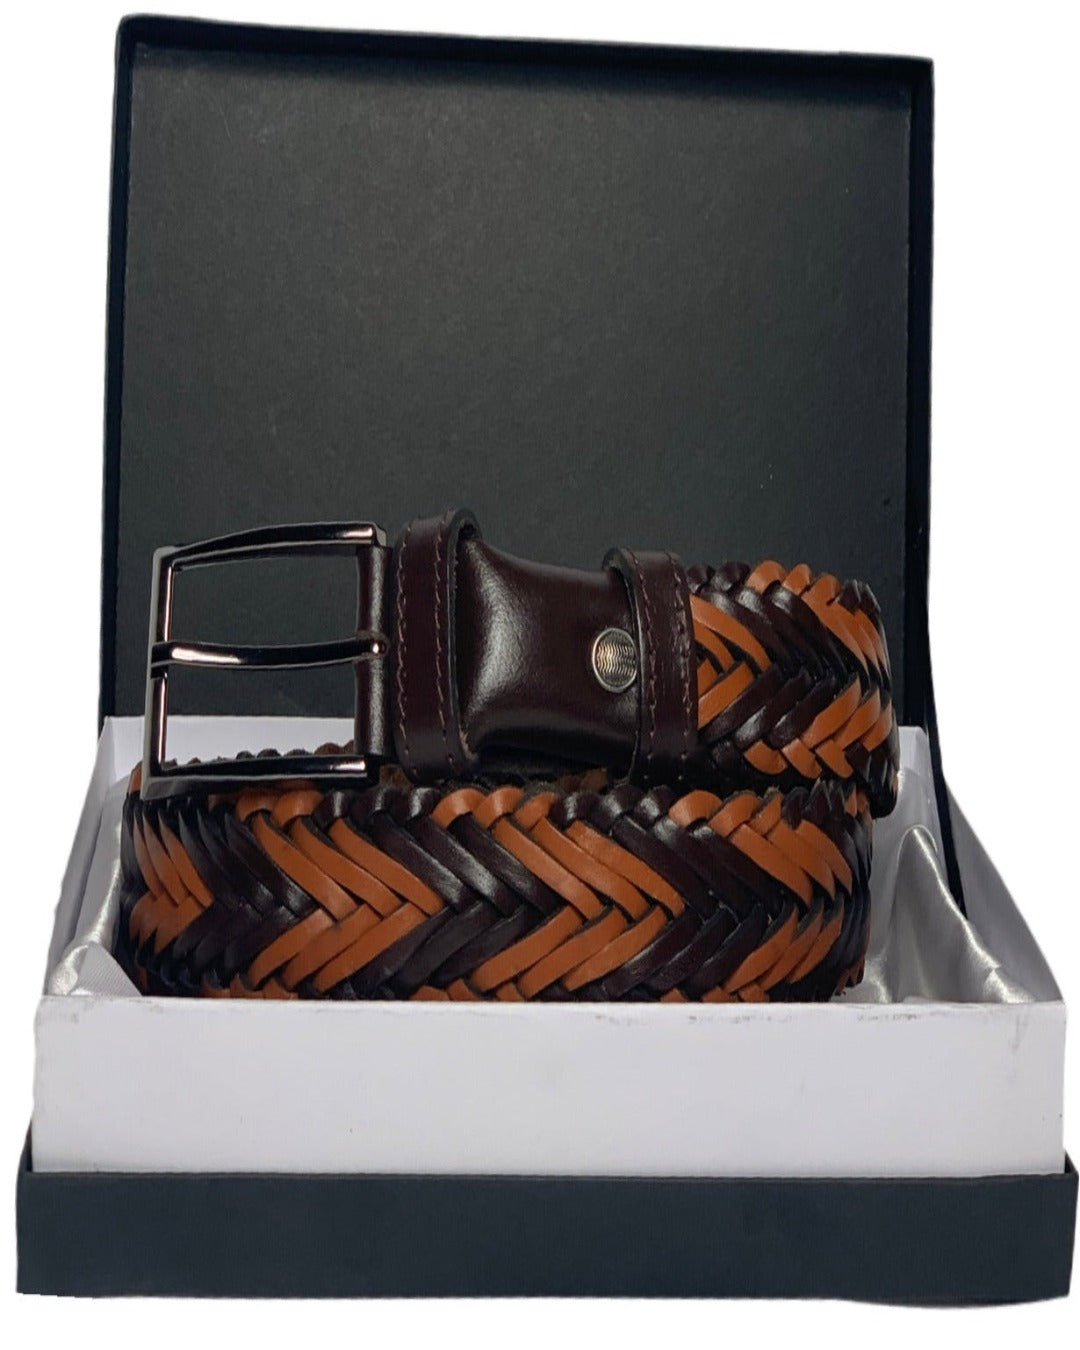 Brown & Tan Genuine Leather Handmade Woven Belt